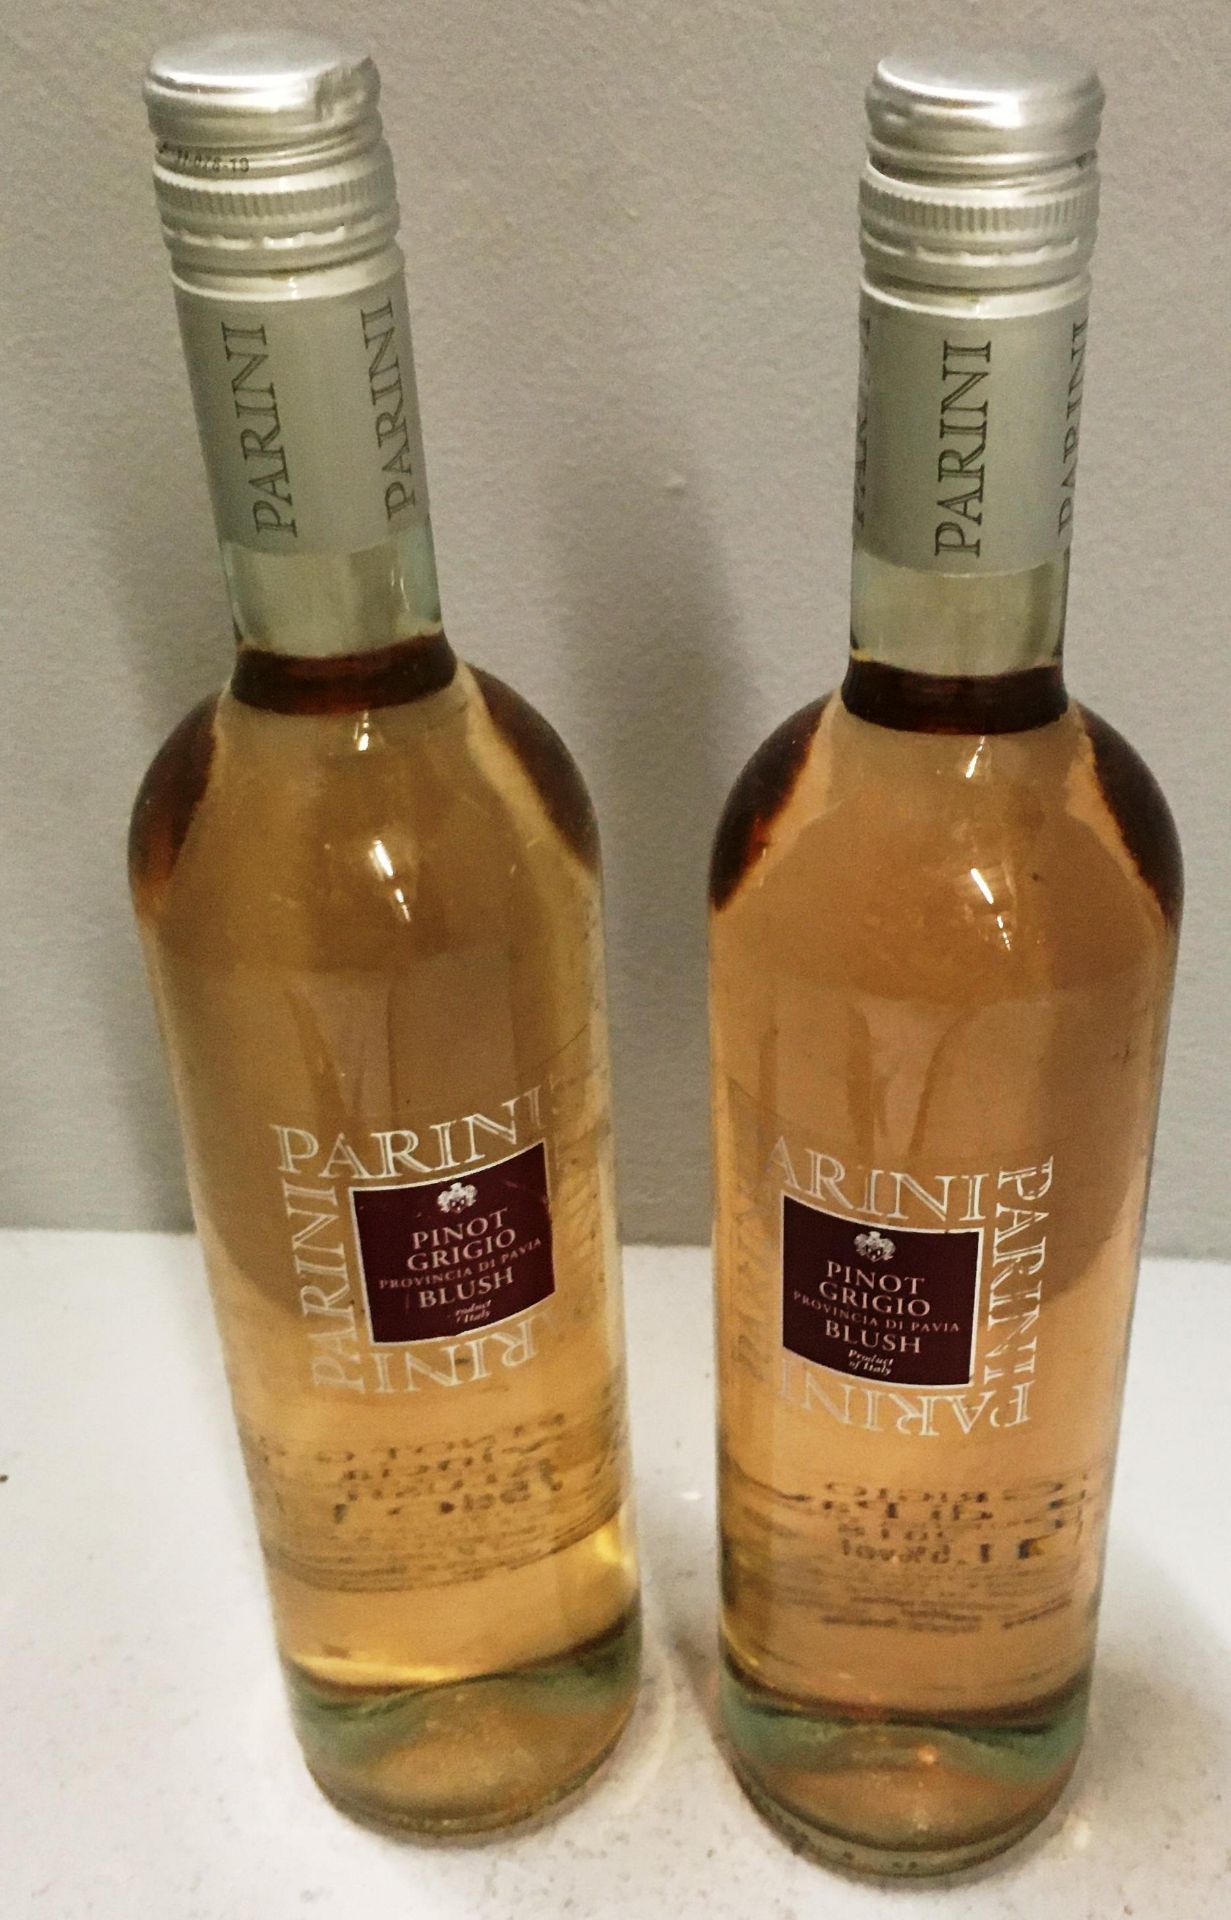 5 x 75cl bottles of Parini Pinot Grigio blush wine